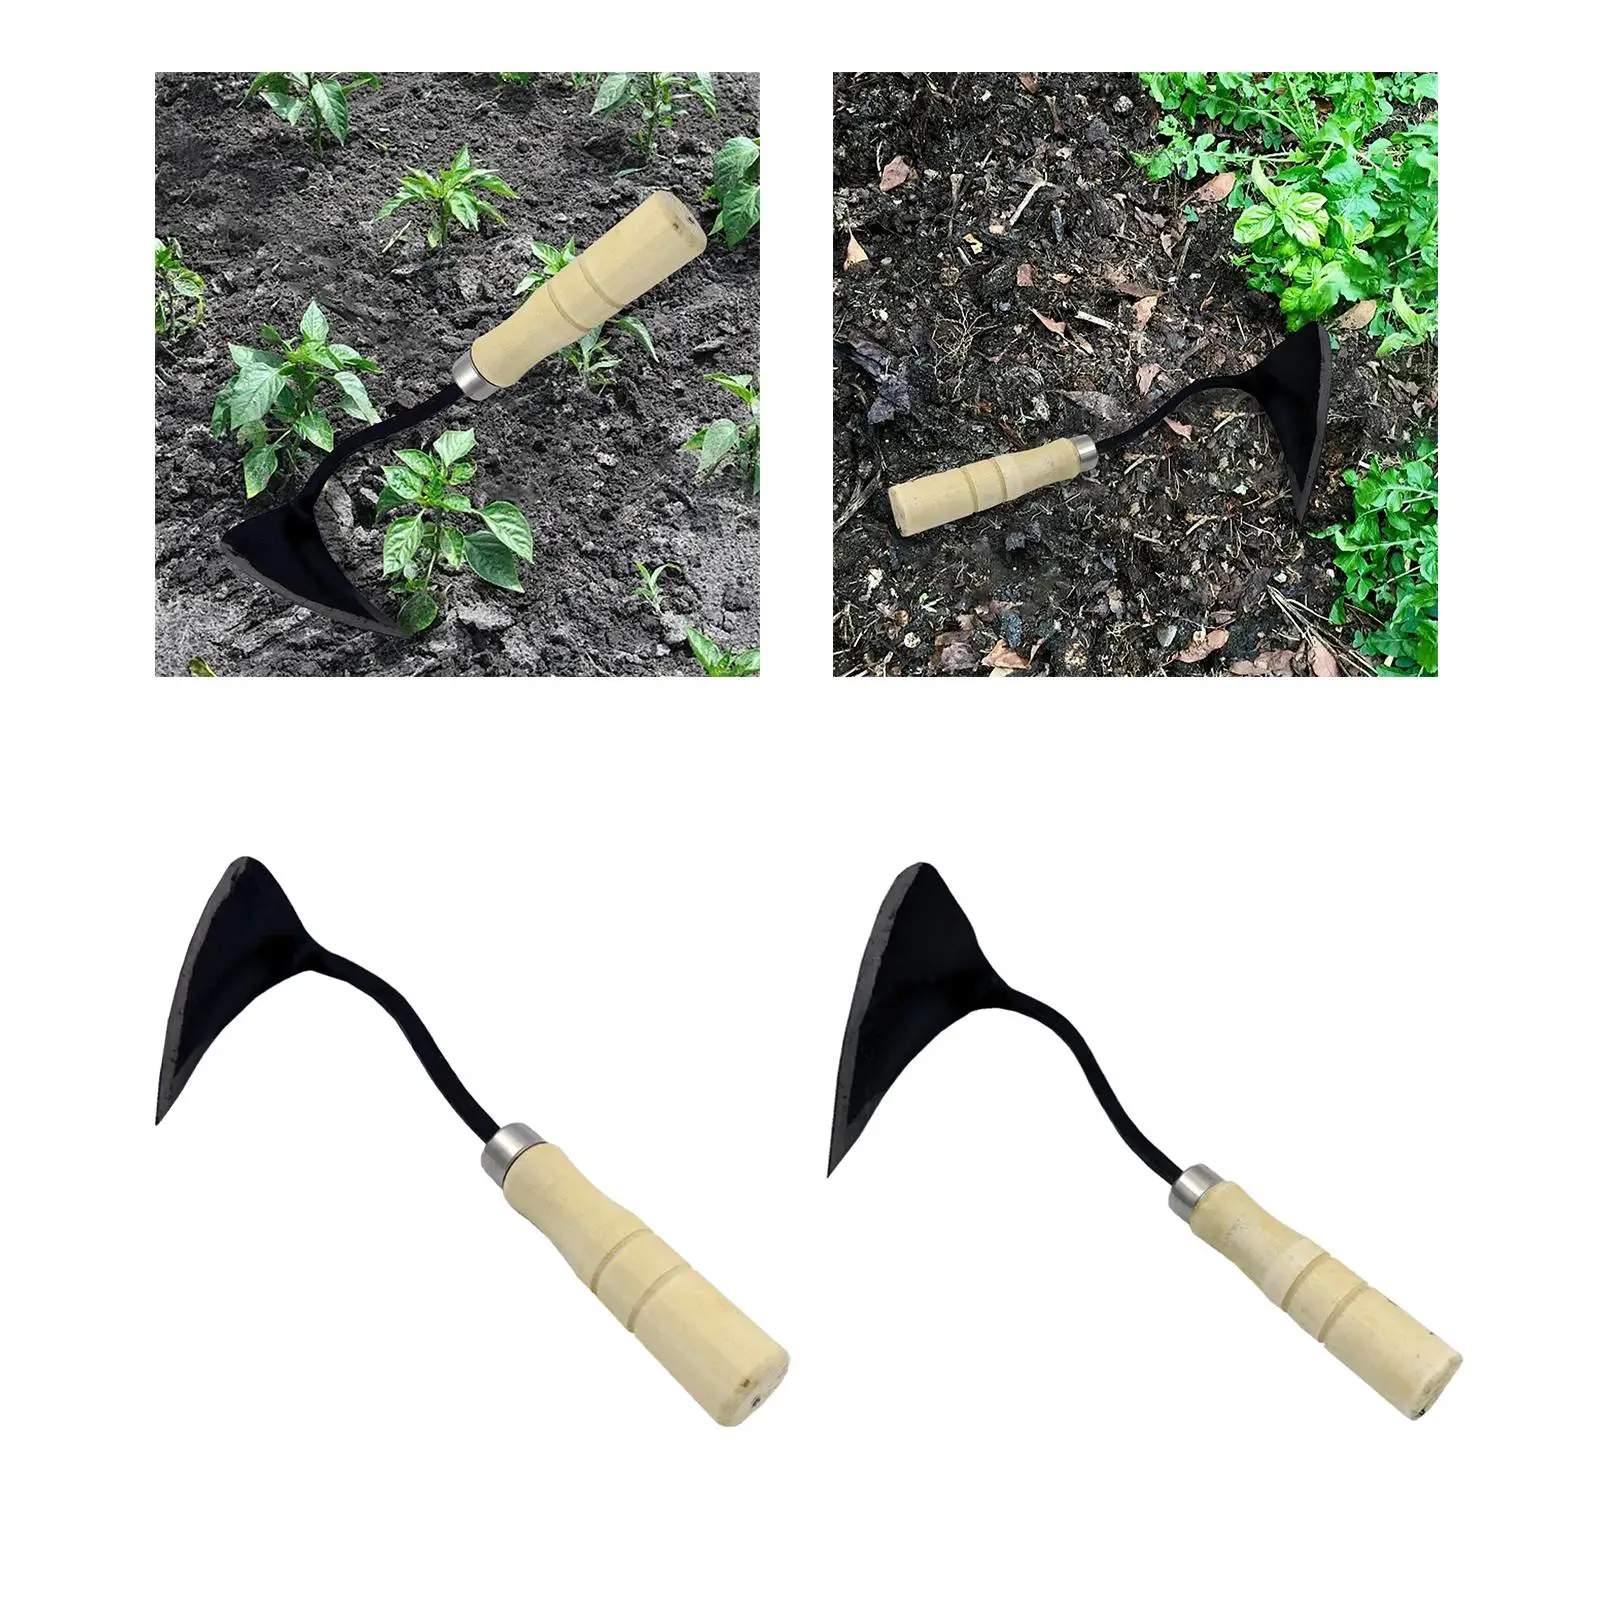 Plow Hoe Less Effort Easy Digging Lawn Grass Edger Hoe Garden Weeds Puller for Flowers Planting Weeding Garden Vegetable